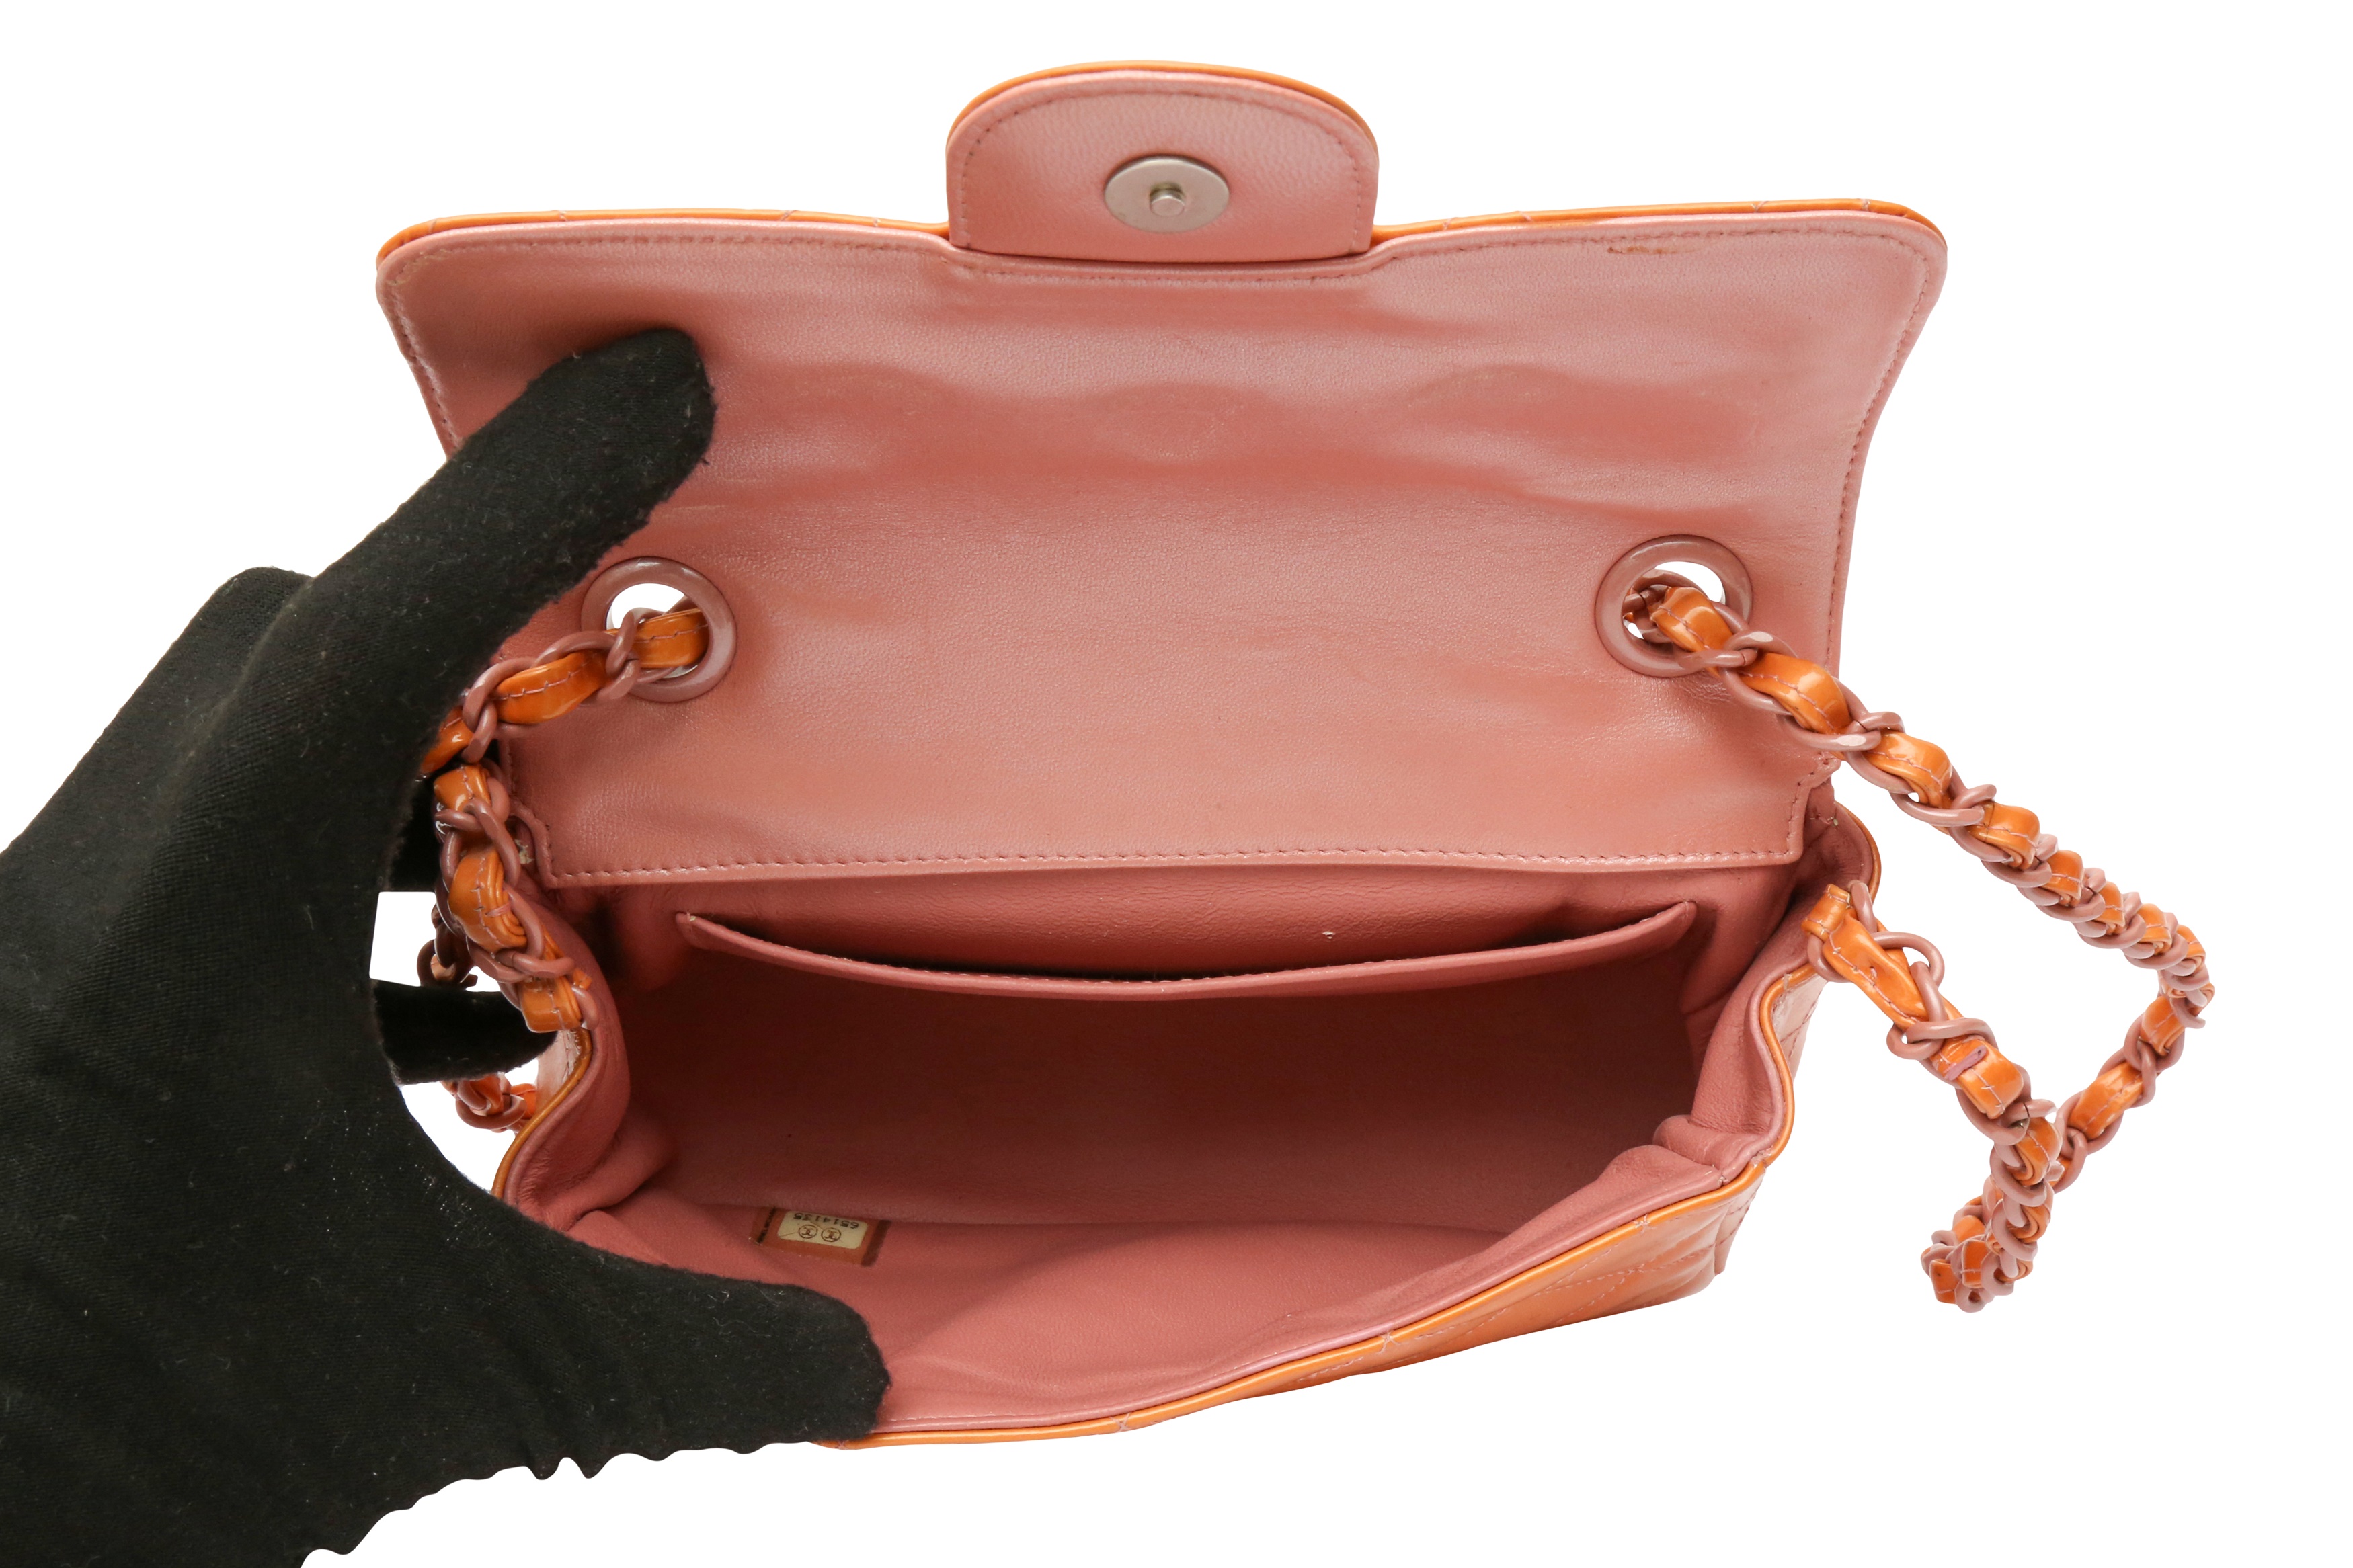 Chanel Orange Rectangle Mini Flap Bag - Image 6 of 6